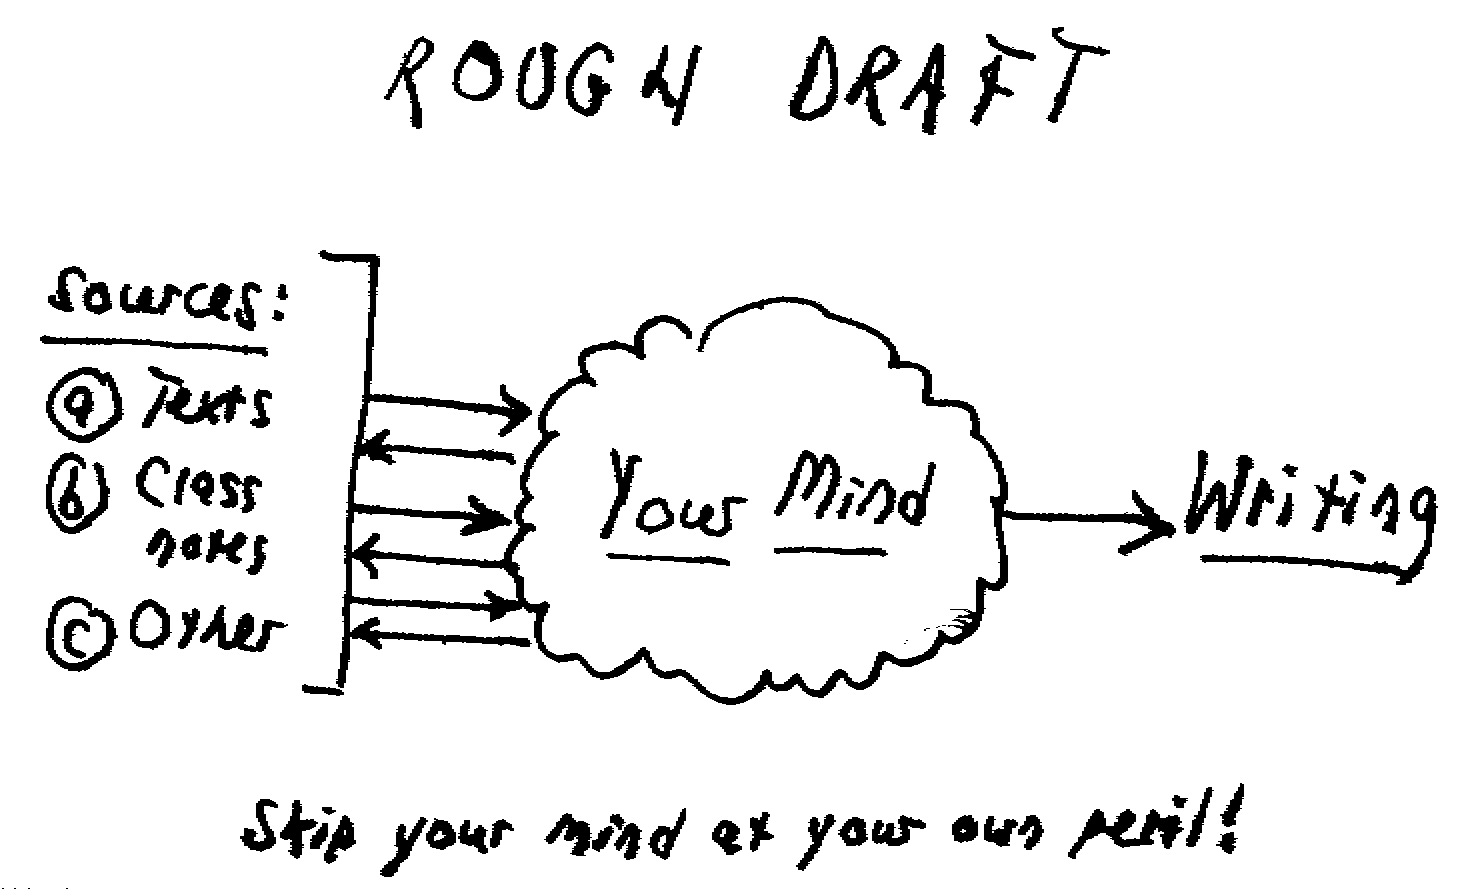 rough-draft